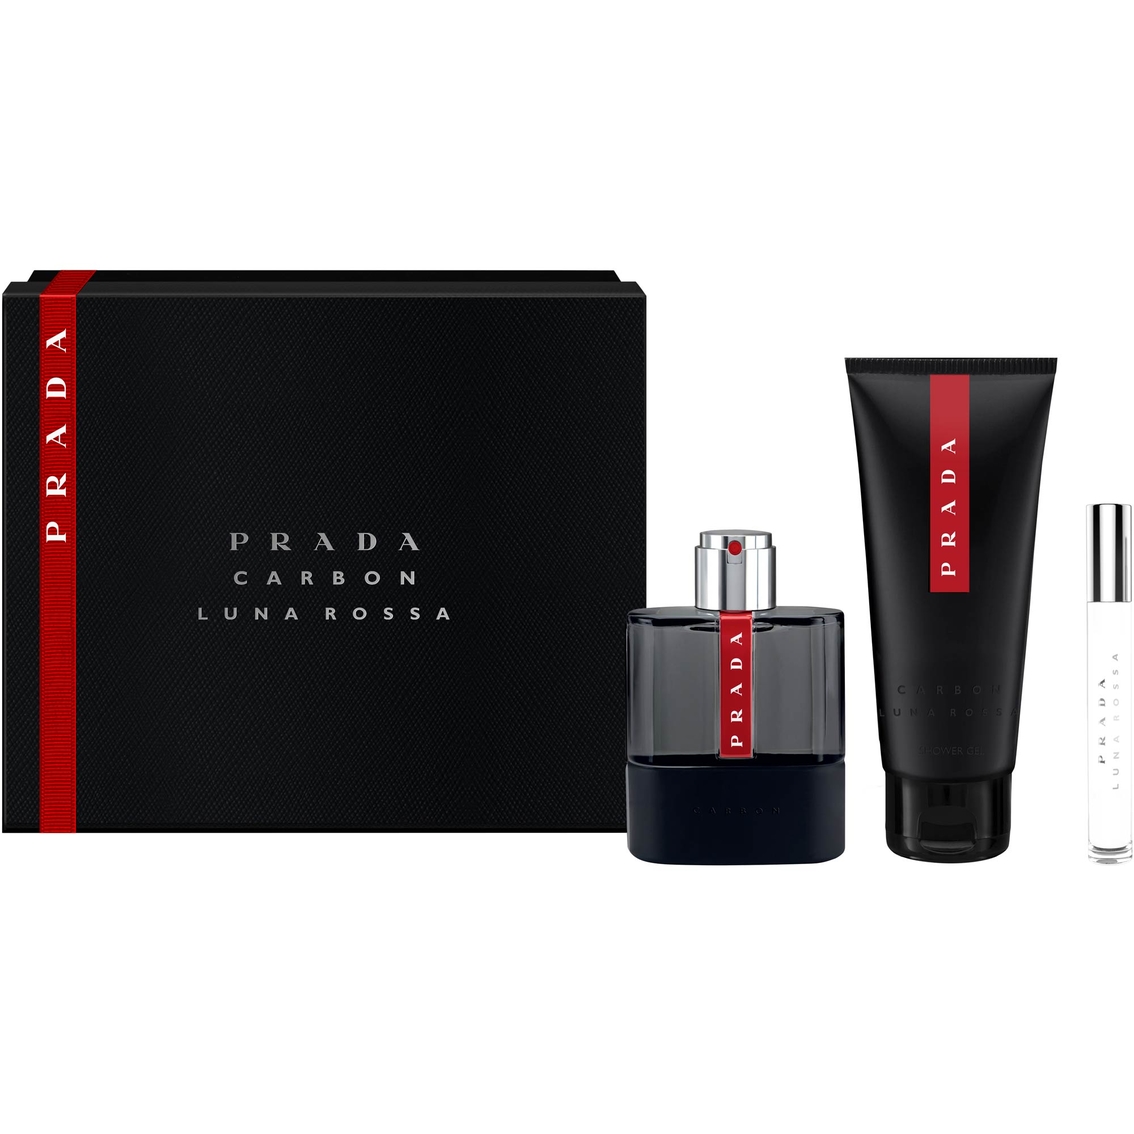 Prada Luna Rossa Carbon Edt Set | Men's Fragrances | Beauty & Health ...